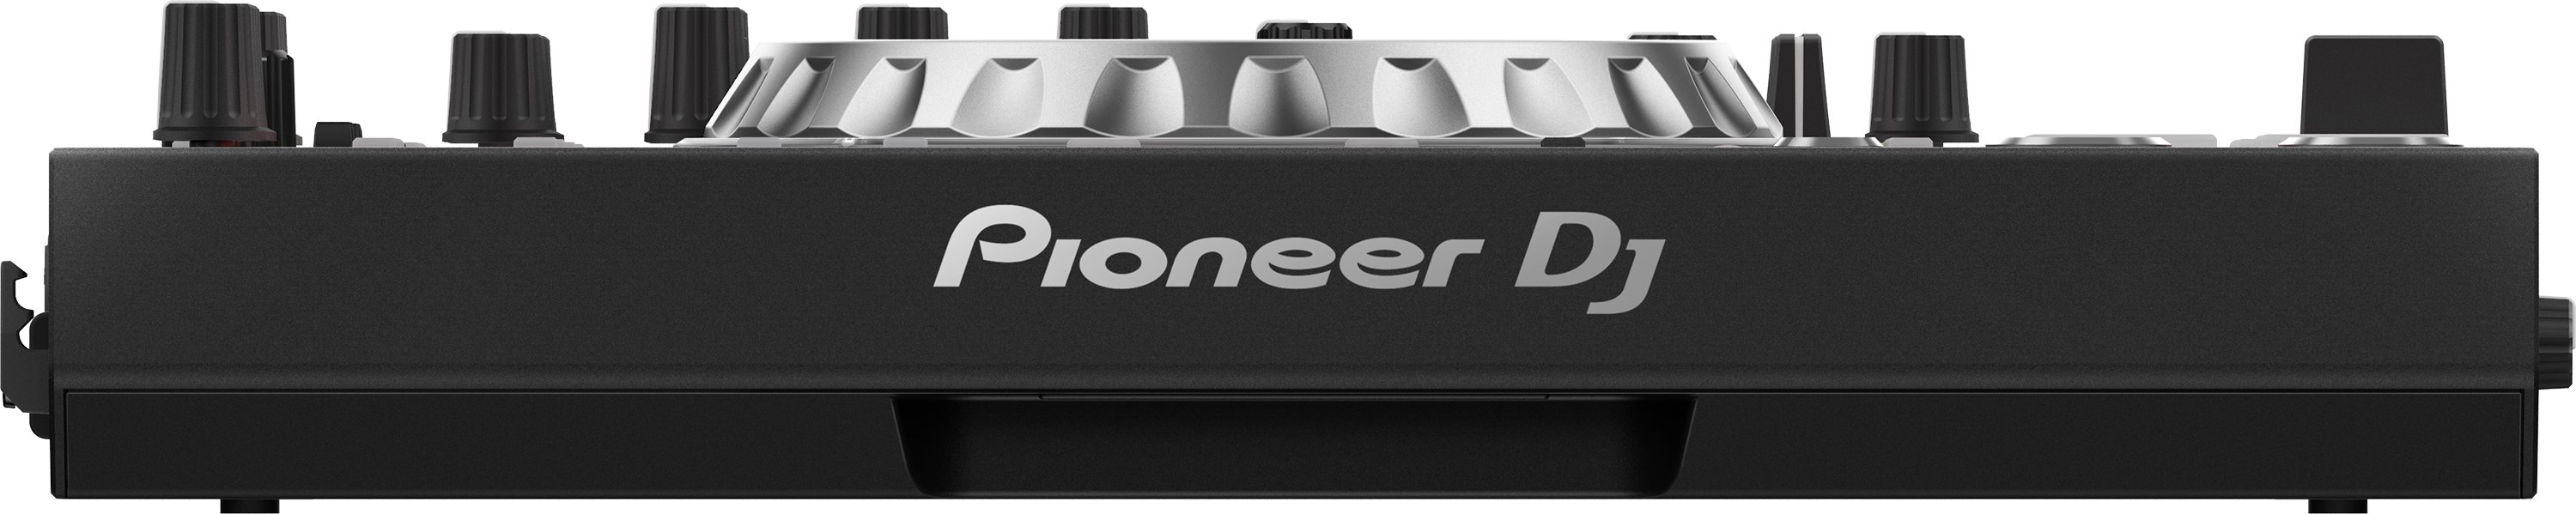 Pioneer Dj Ddj-sx3 - USB DJ controller - Variation 4